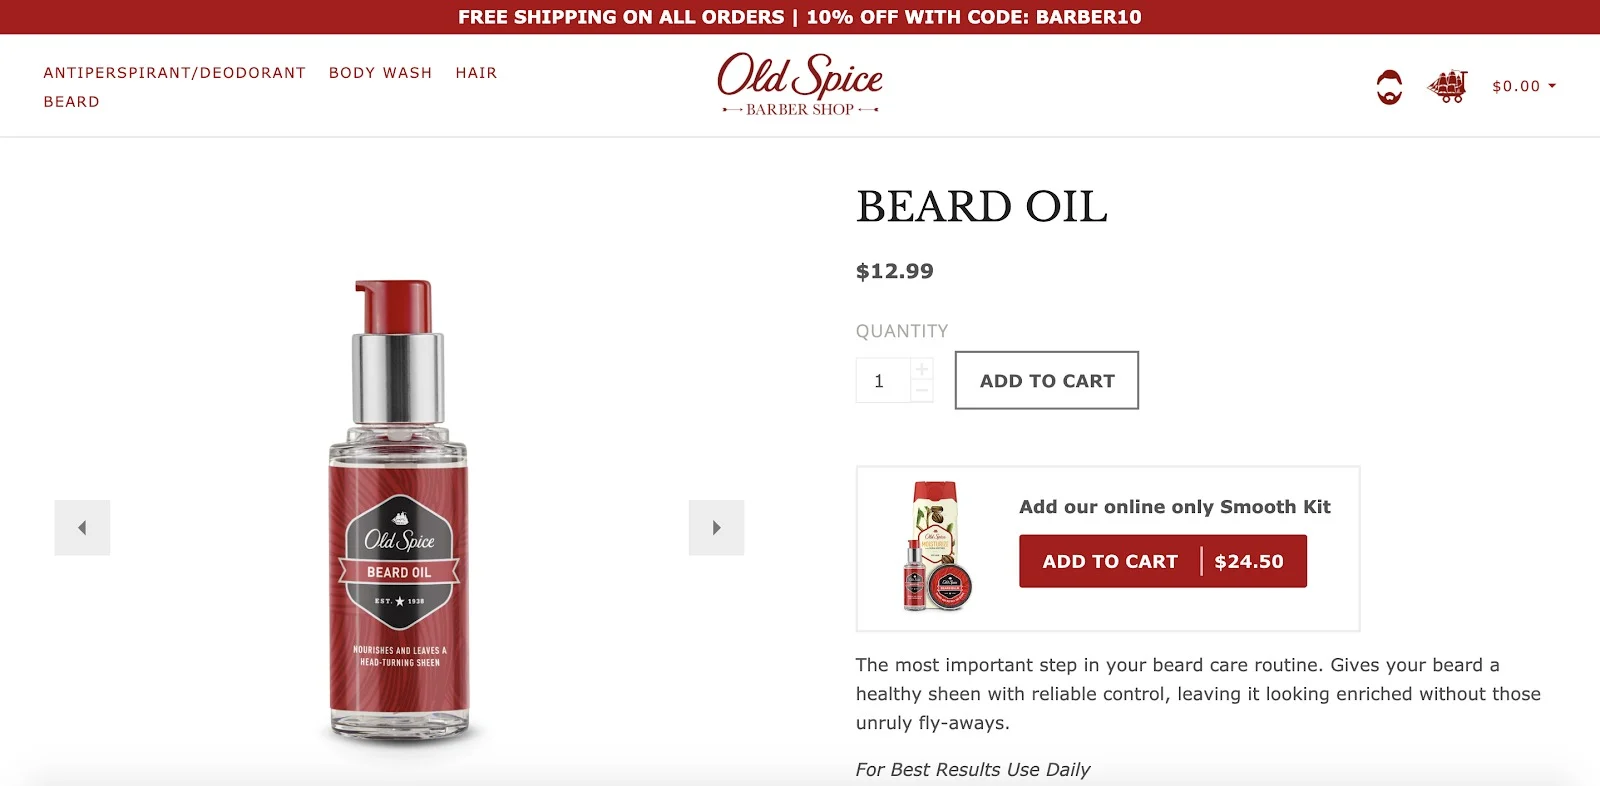 https://bcwpmktg.wpengine.com/wp-content/uploads/2019/07/Old-Spice-Beard-Oil-Store-Example.jpg